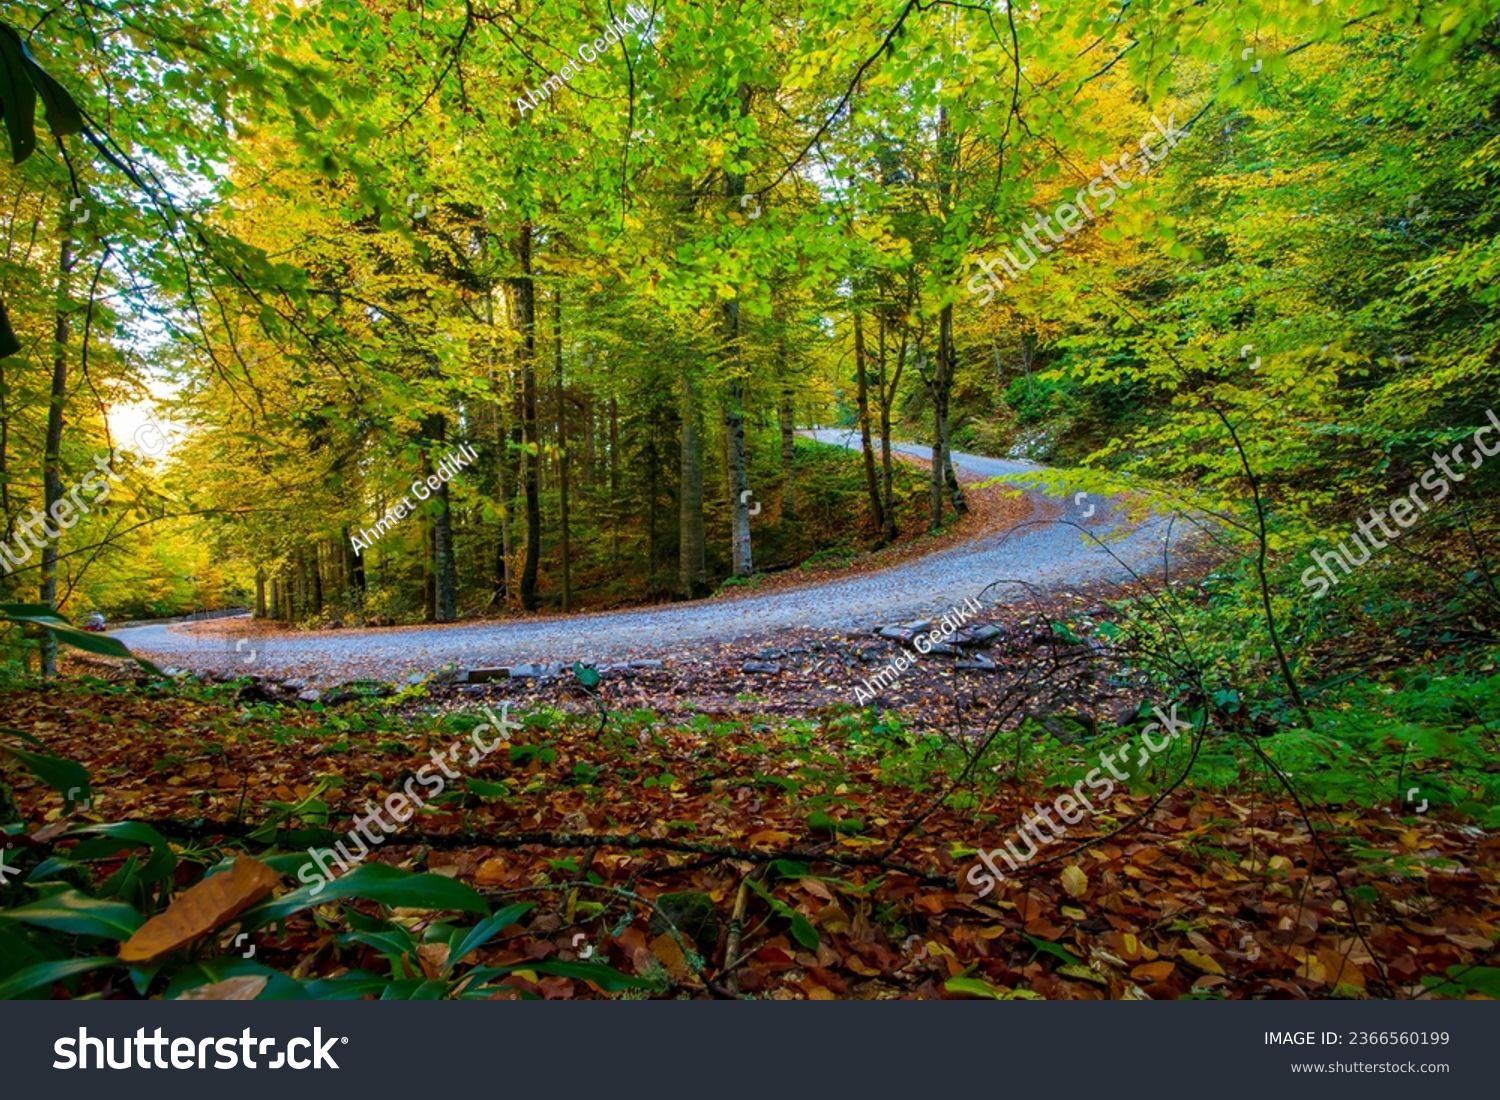 
This bend in Yedigöller looks very beautiful in the autumn season. #2366560199